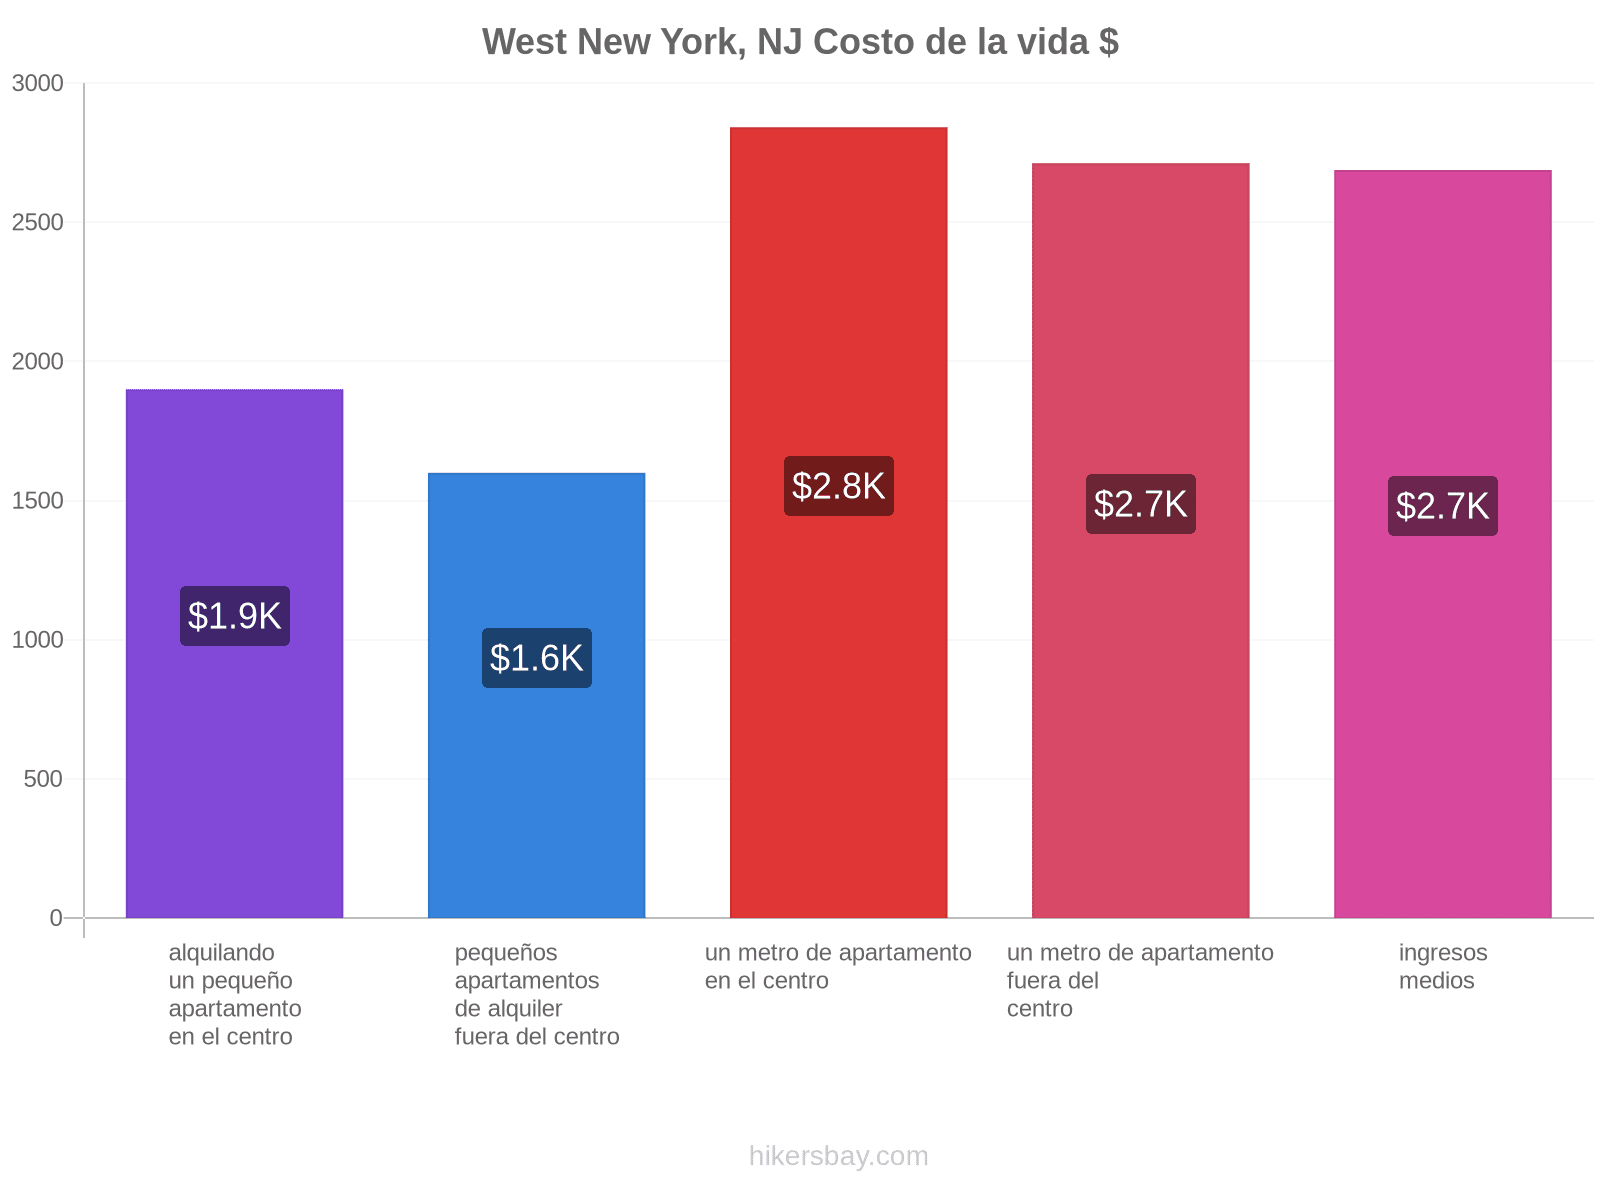 West New York, NJ costo de la vida hikersbay.com